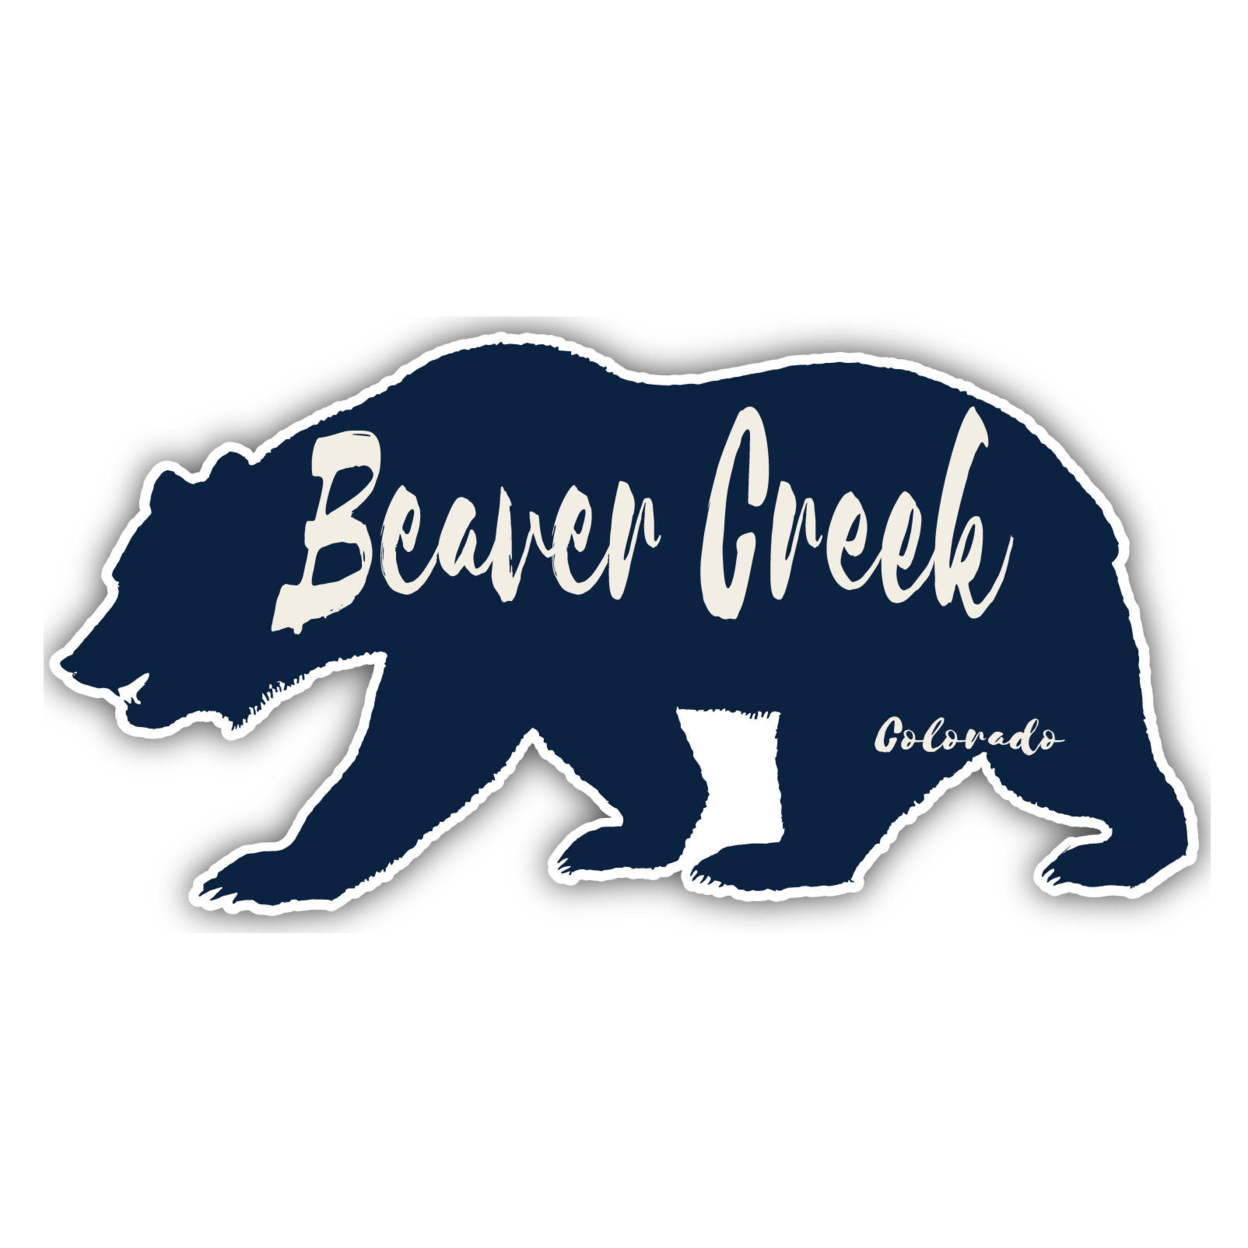 Beaver Creek Colorado Souvenir Decorative Stickers (Choose Theme And Size) - Single Unit, 8-Inch, Bear